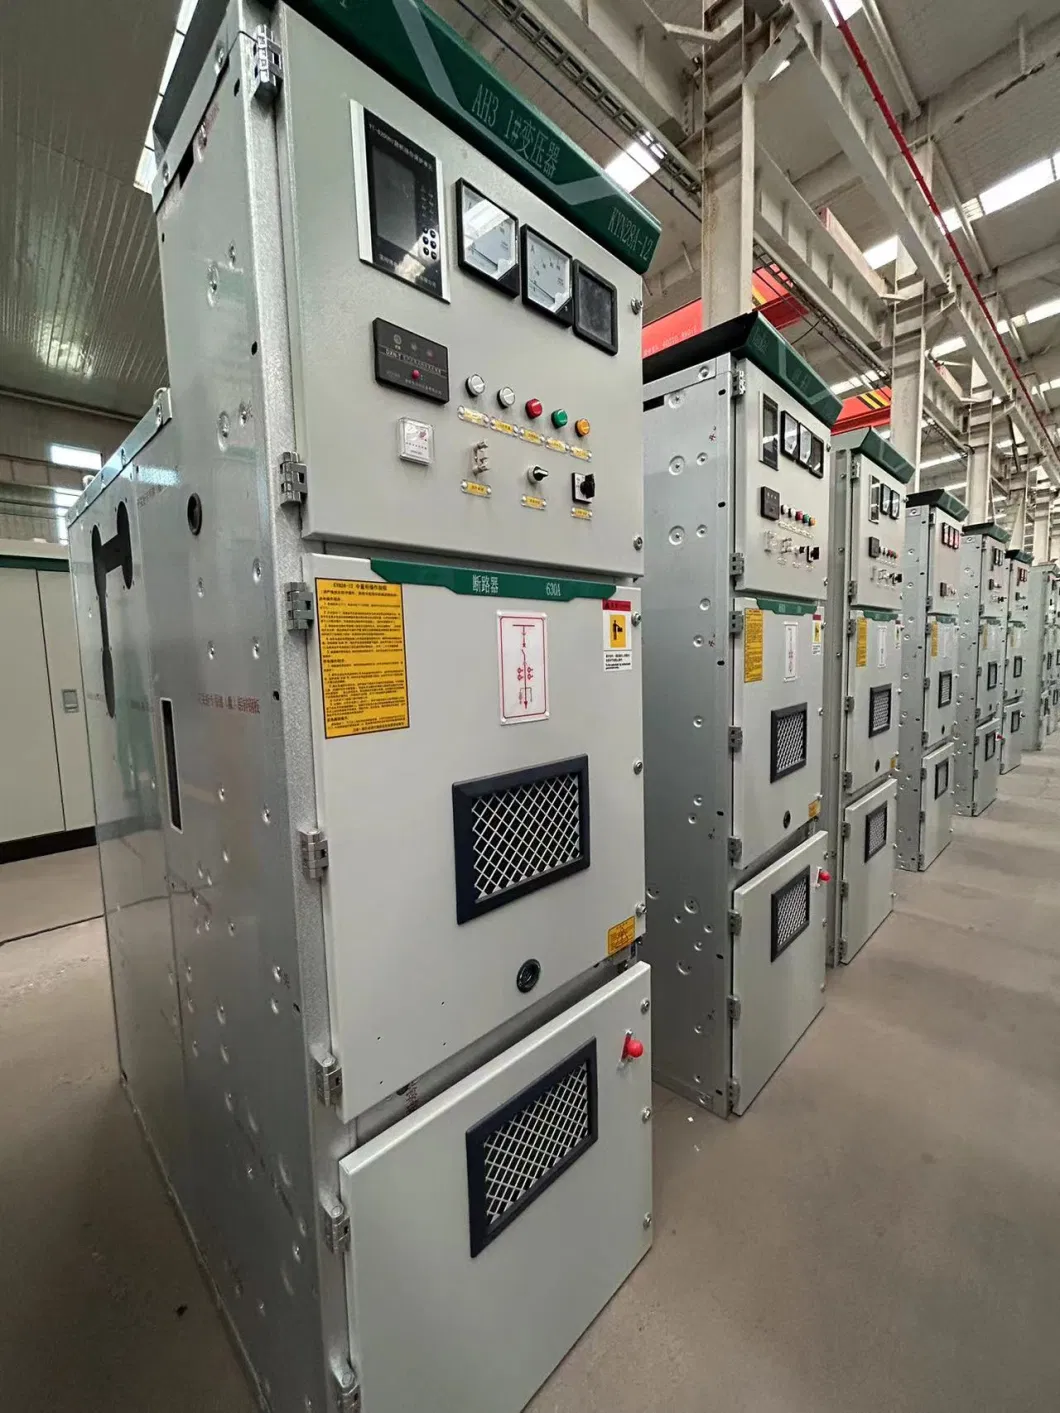 Power Supply Gck Ggj Gis Fully Enclosed Busbar Distribution Cabinet Outside Switchgear